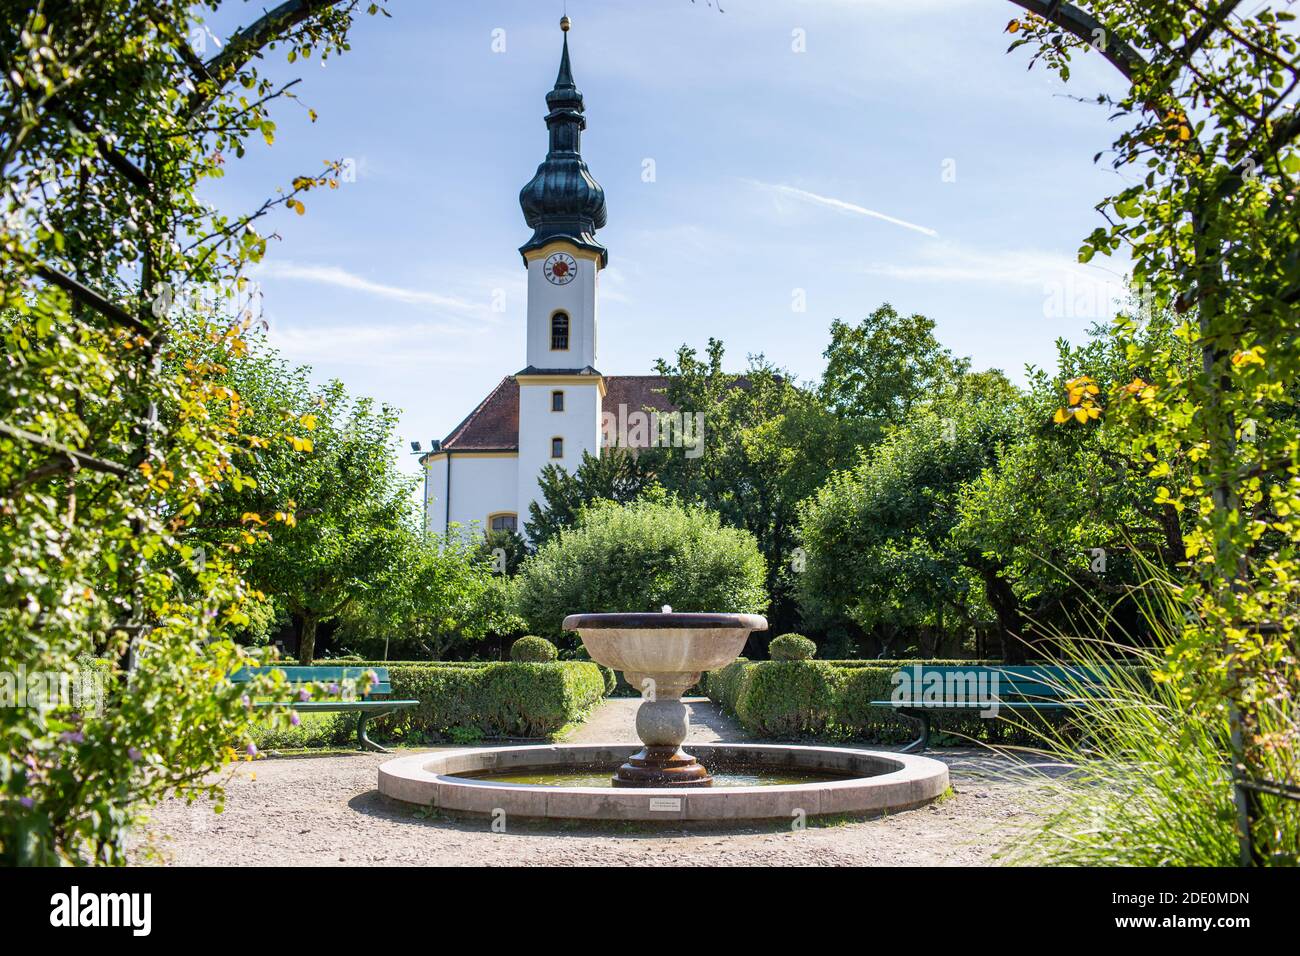 Schlossgarten - Starnberger See - Palace Gardens at Lake Starnberg, Bayern, Germany Stock Photo